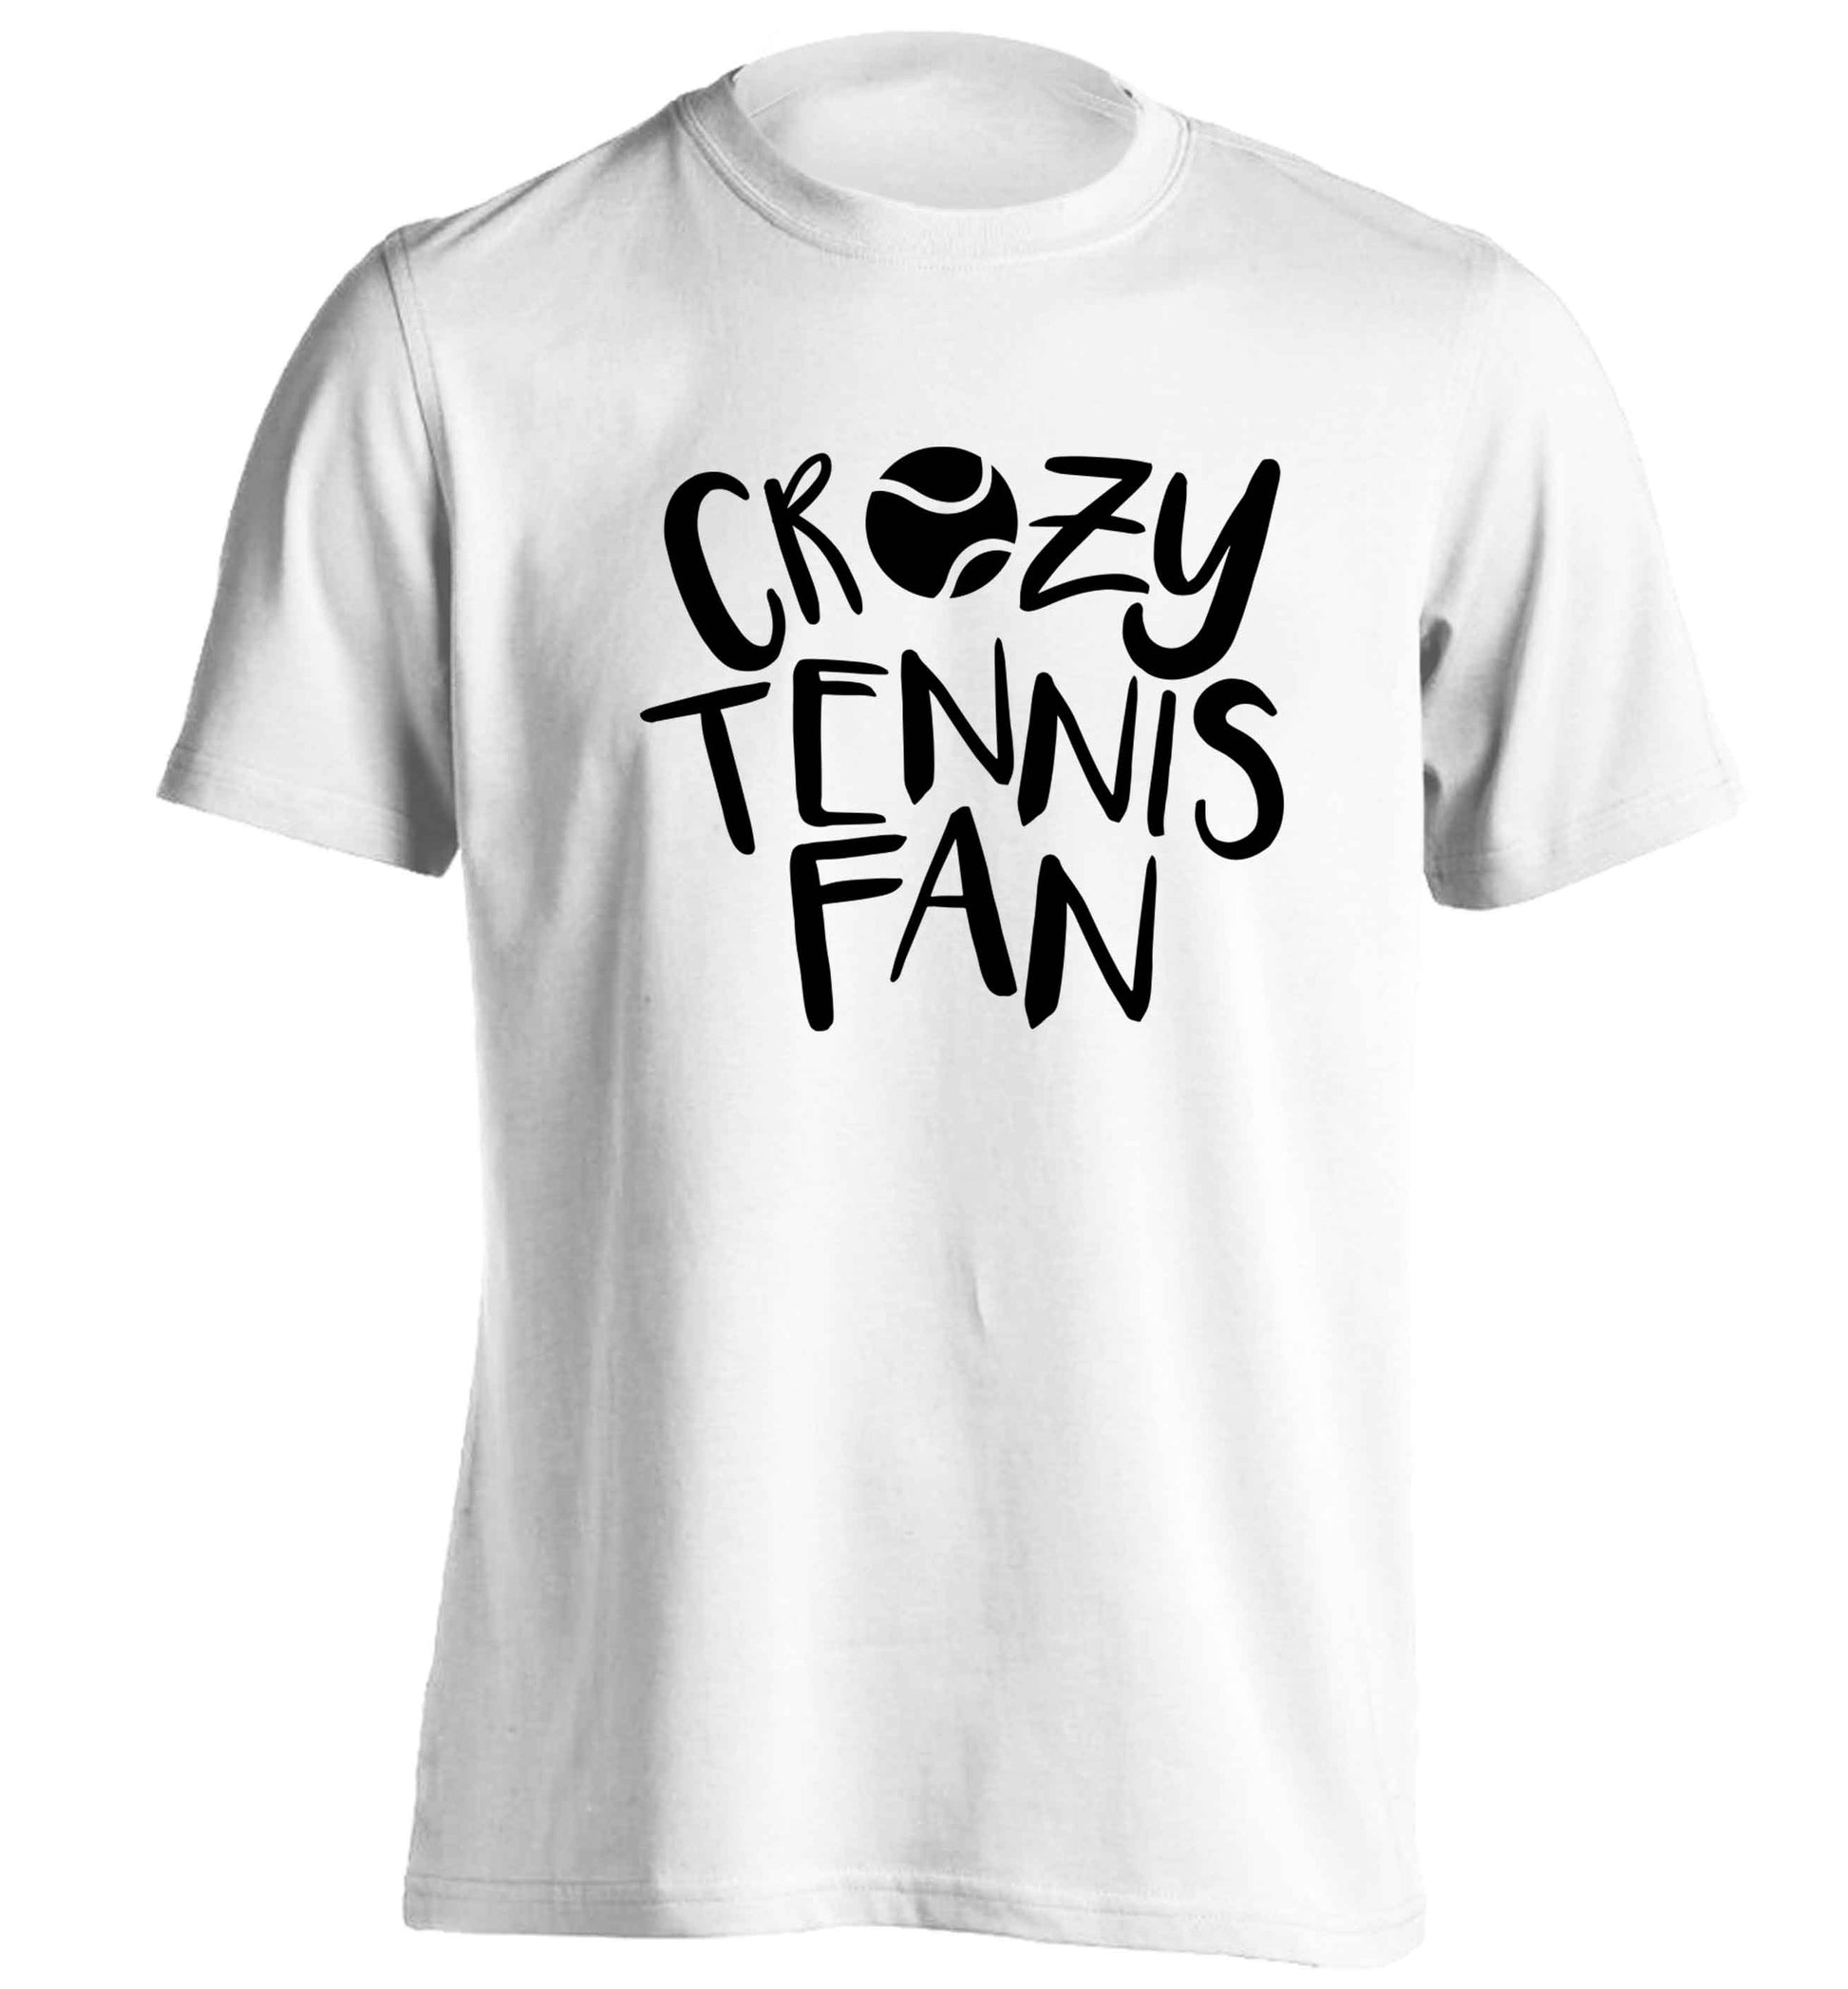 Crazy tennis fan adults unisex white Tshirt 2XL